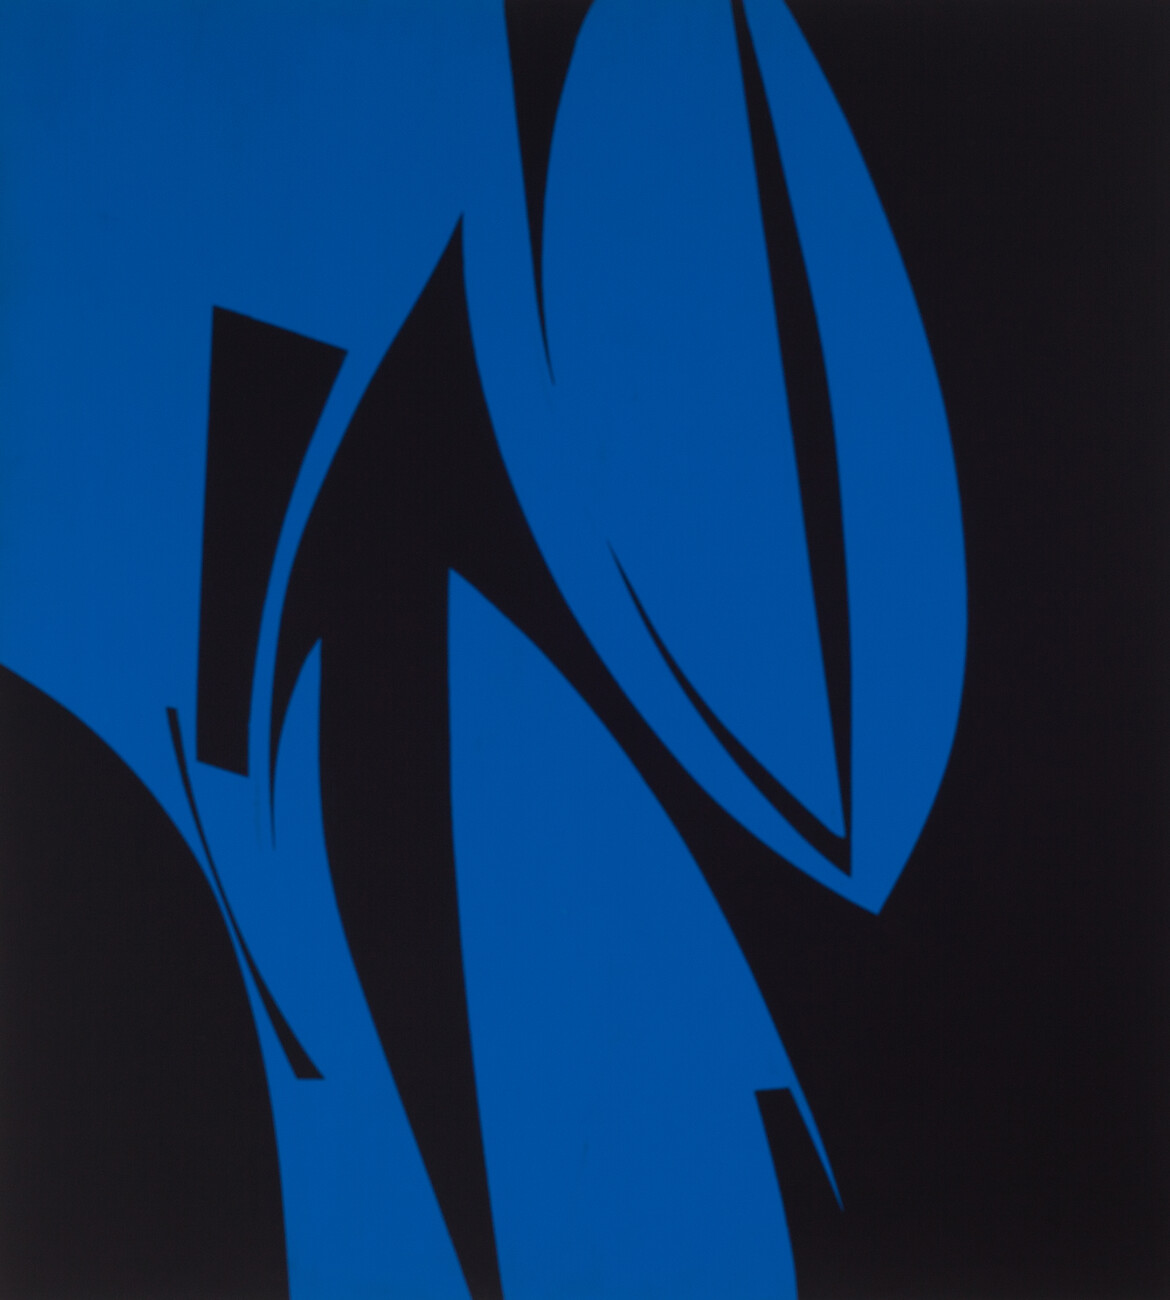 black painting with blue interlocking shapes